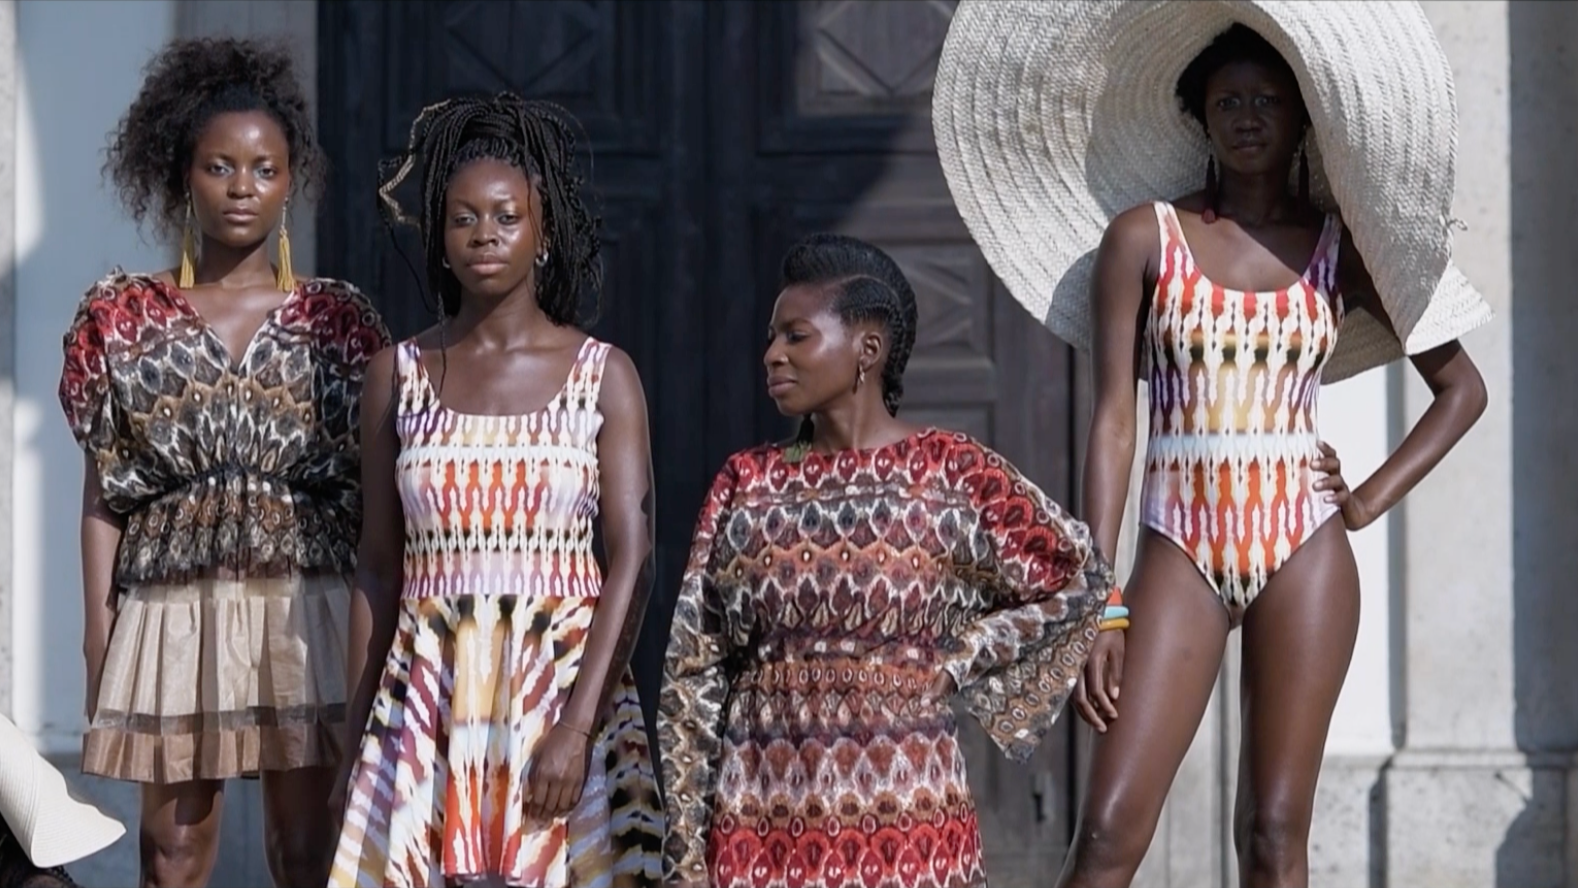 Milan Fashion Week showcases African-Italian designers in BLM move - CGTN